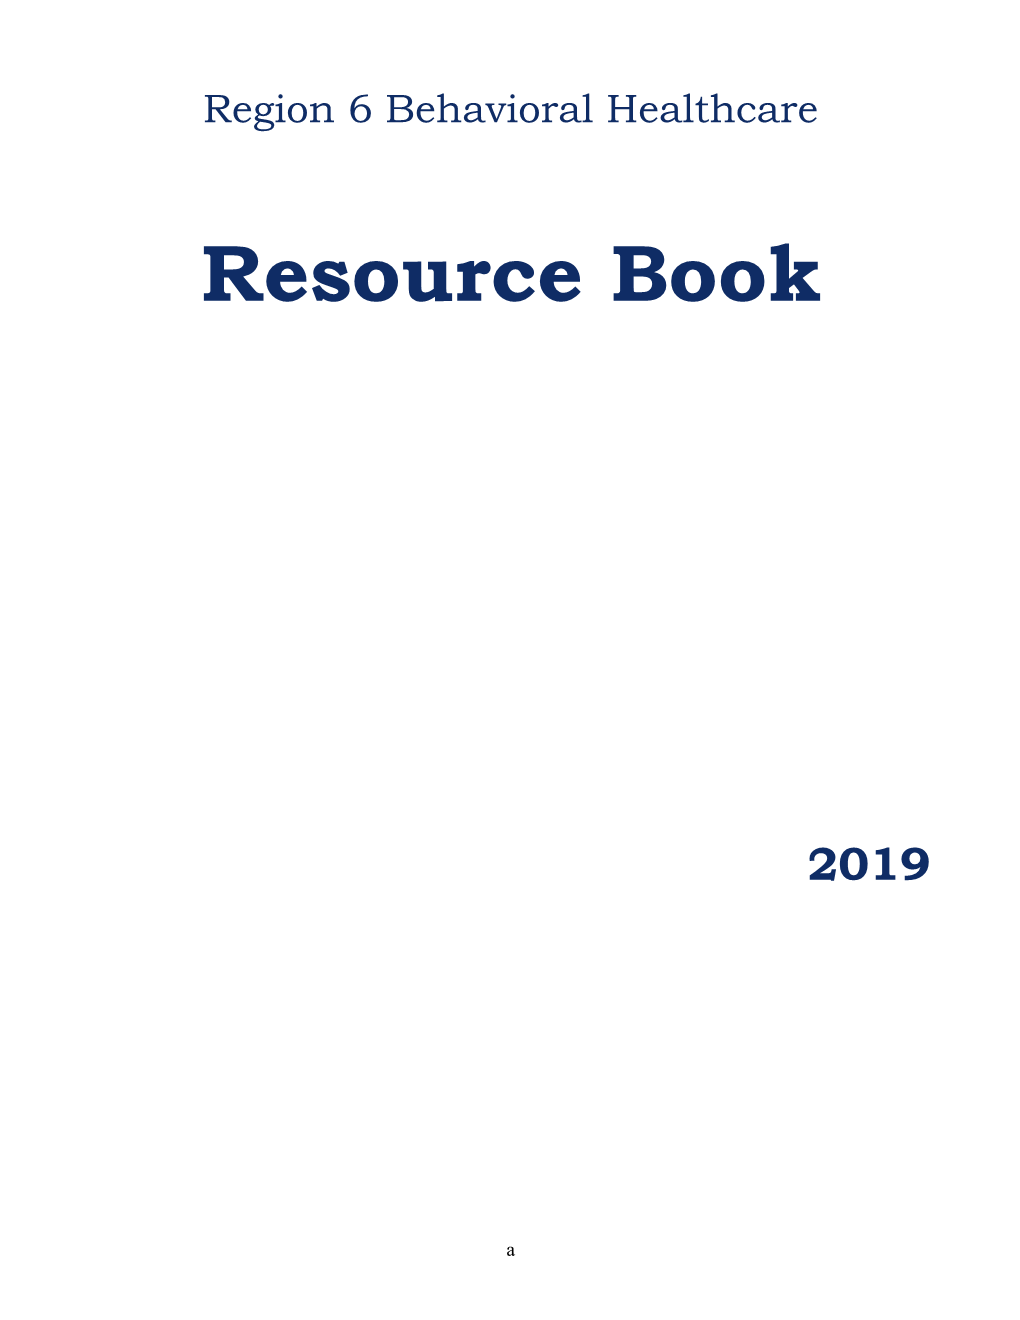 Resource Book